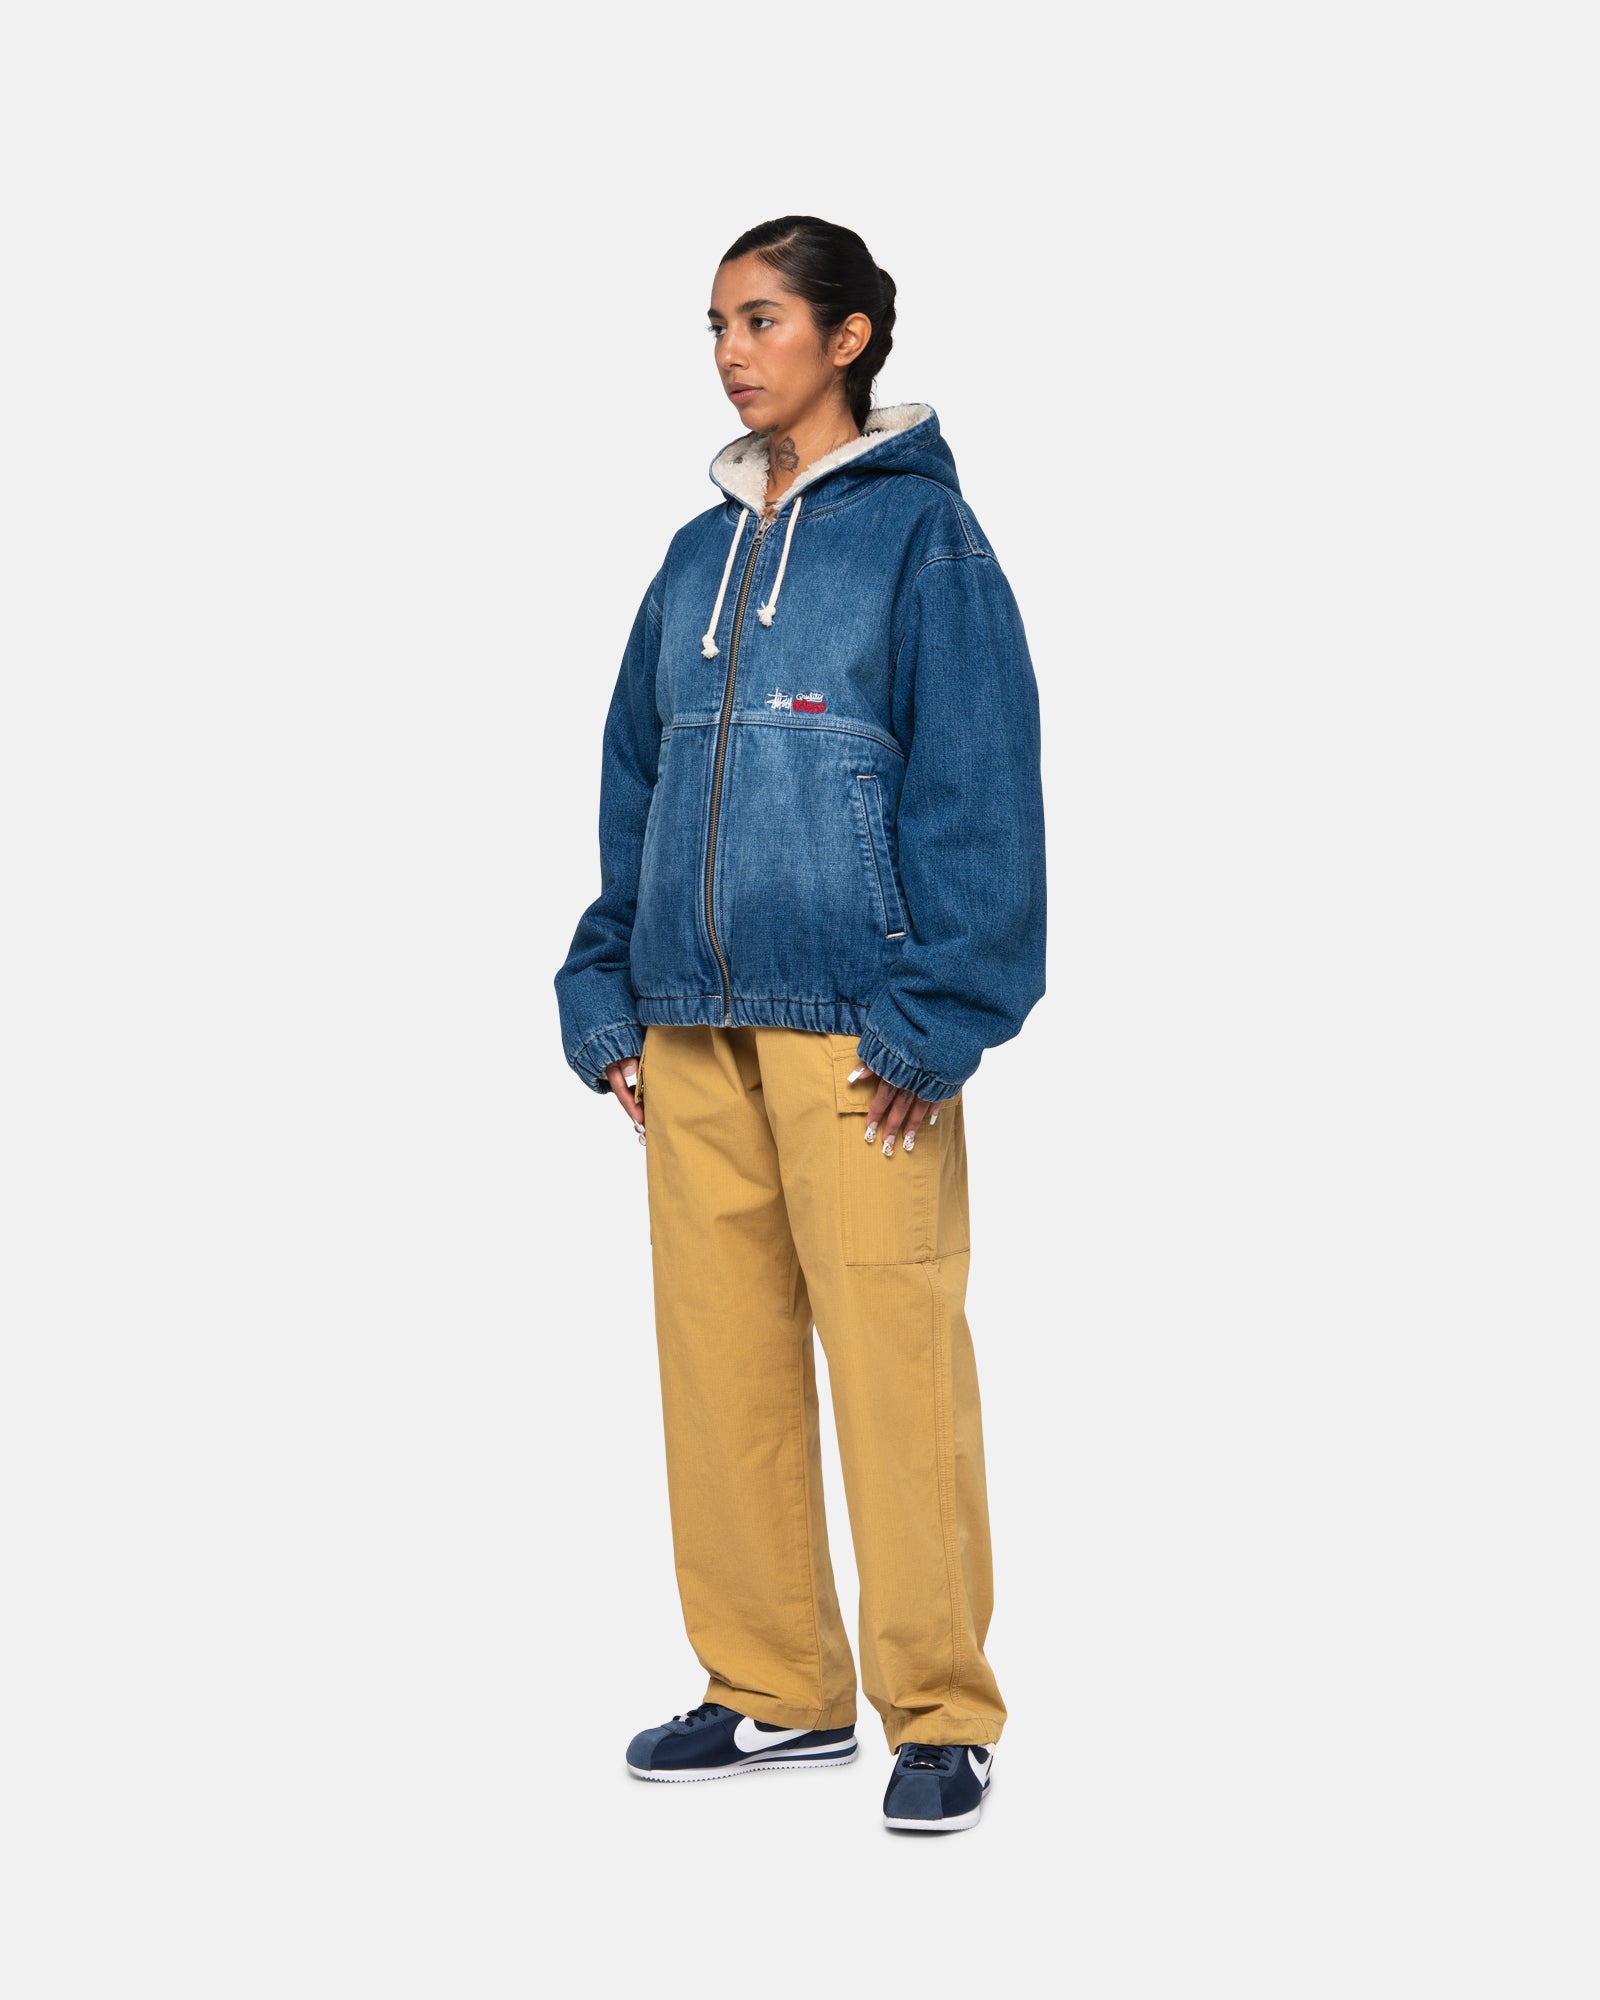 Work Jacket Denim Sherpa - Unisex Jackets & Outerwear | Stüssy